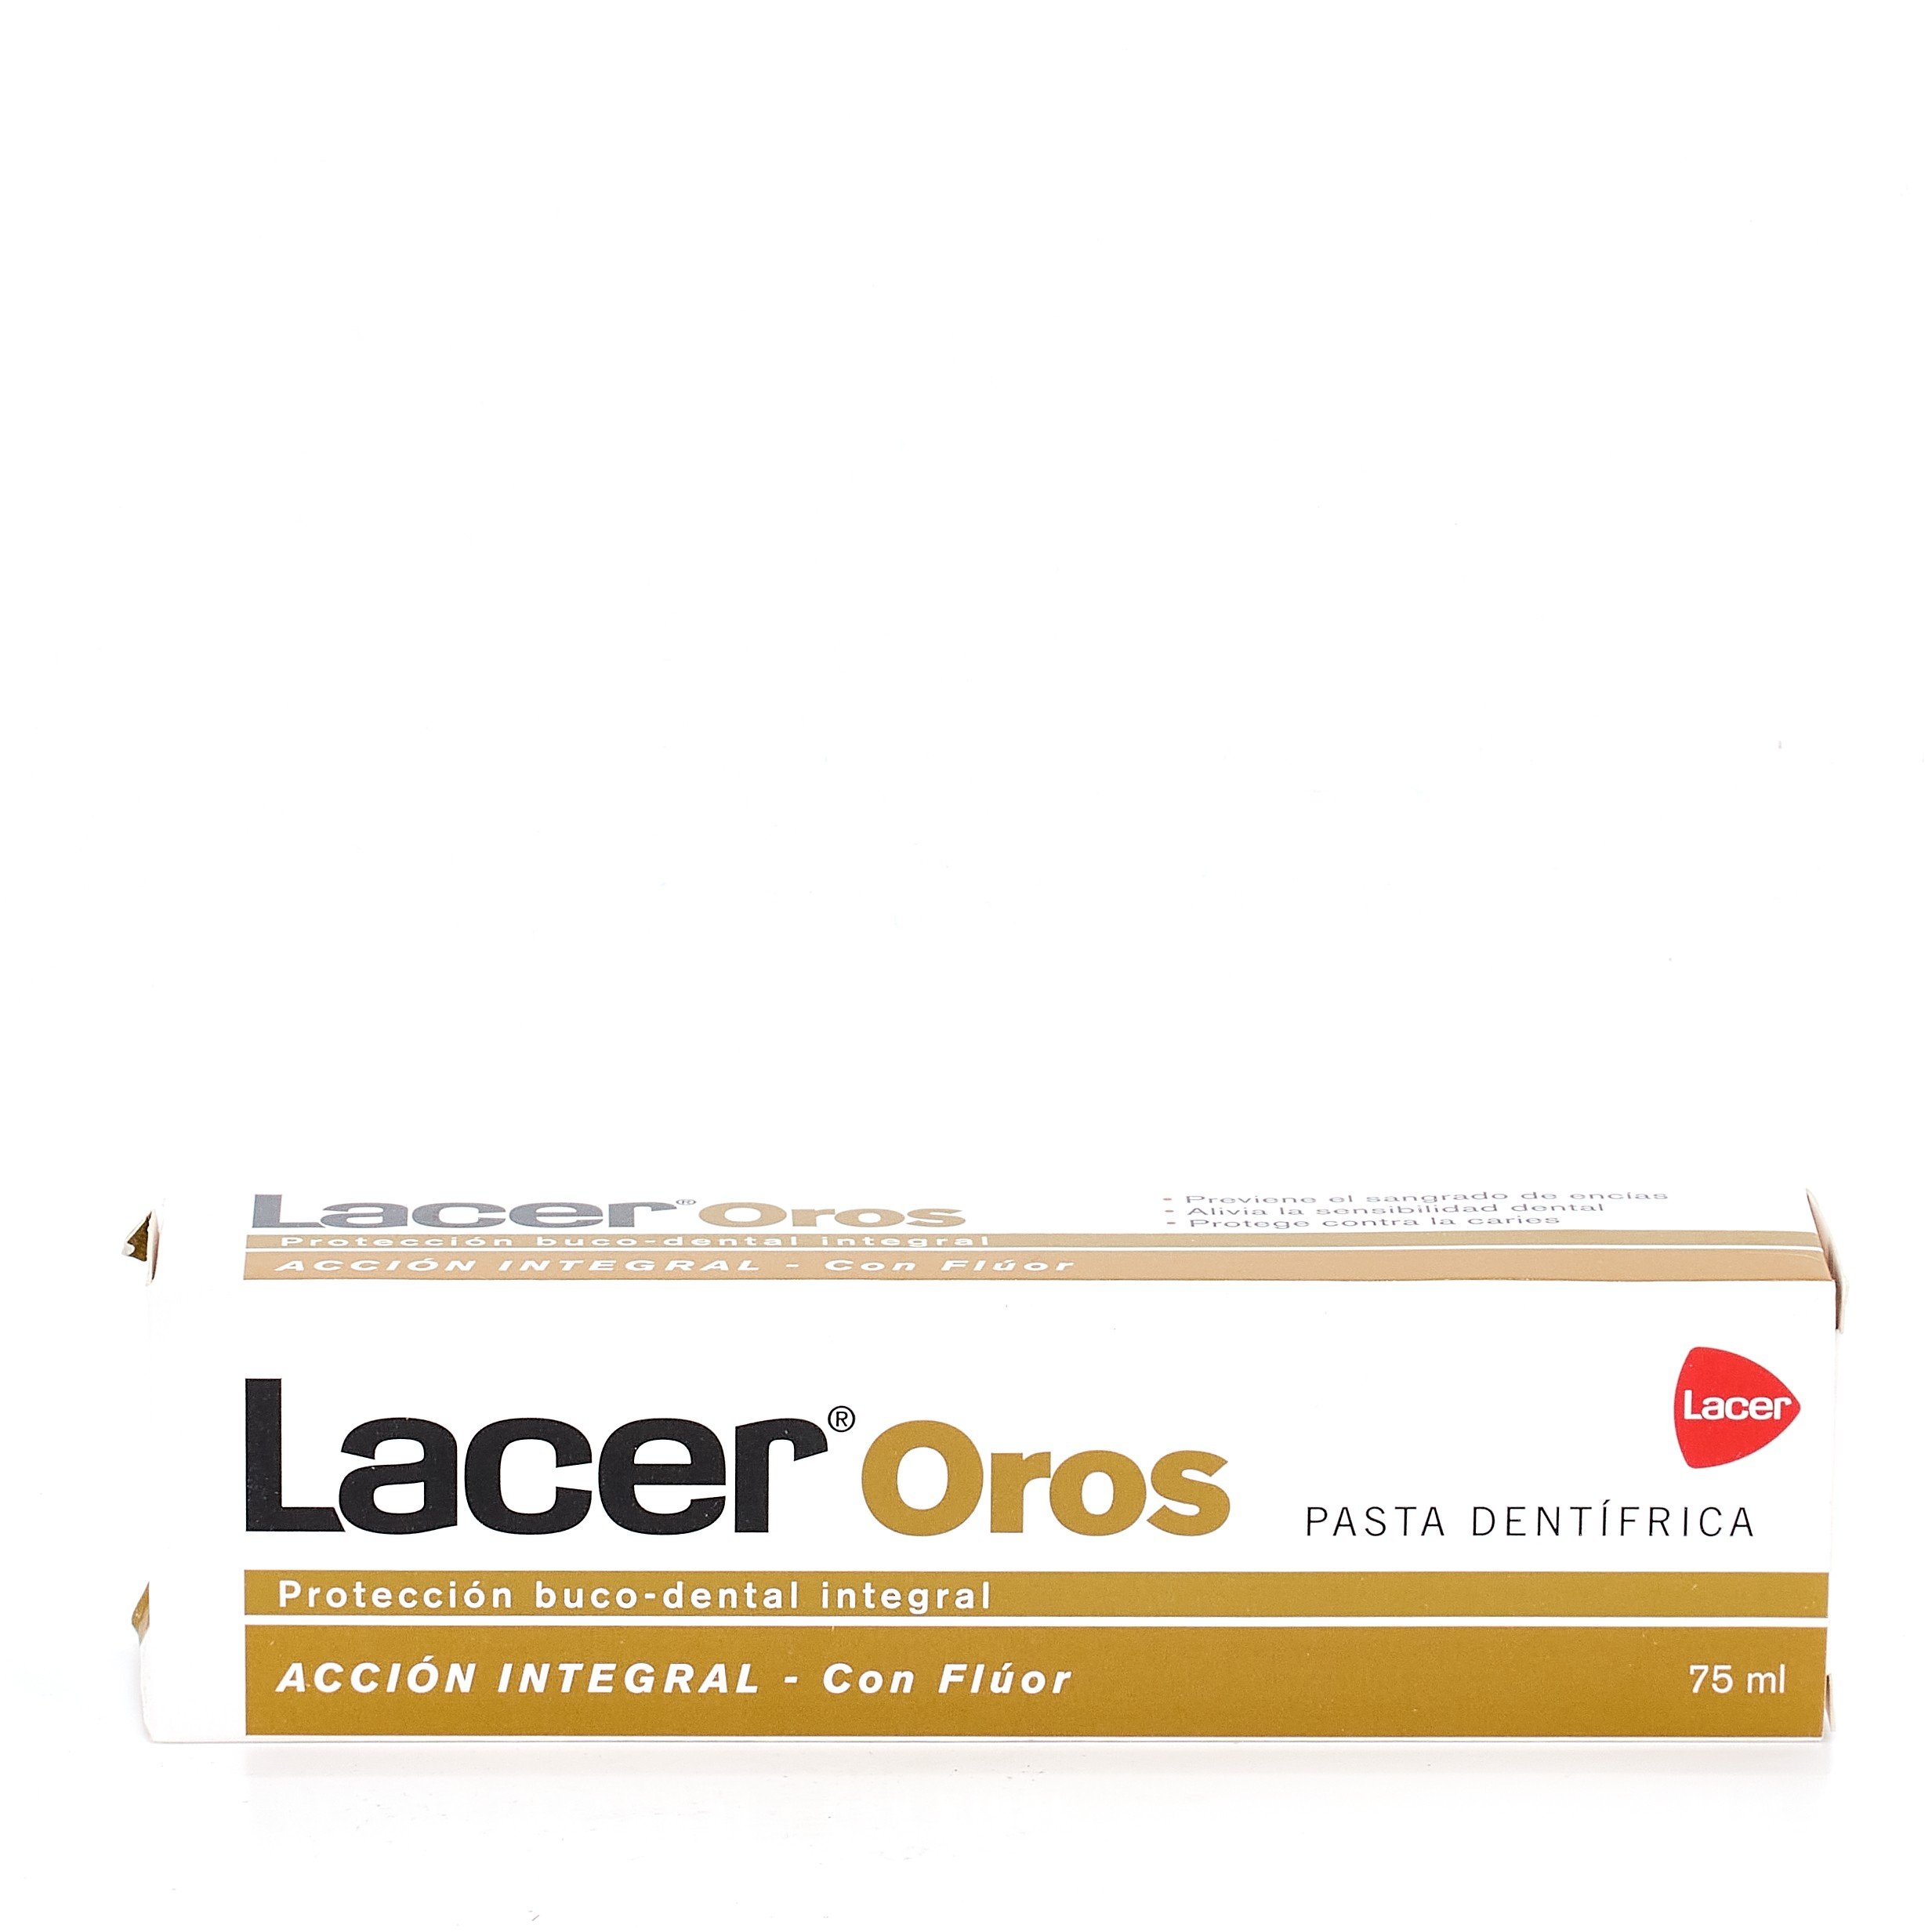 Lacer Oros Pasta Dental, 75ml.